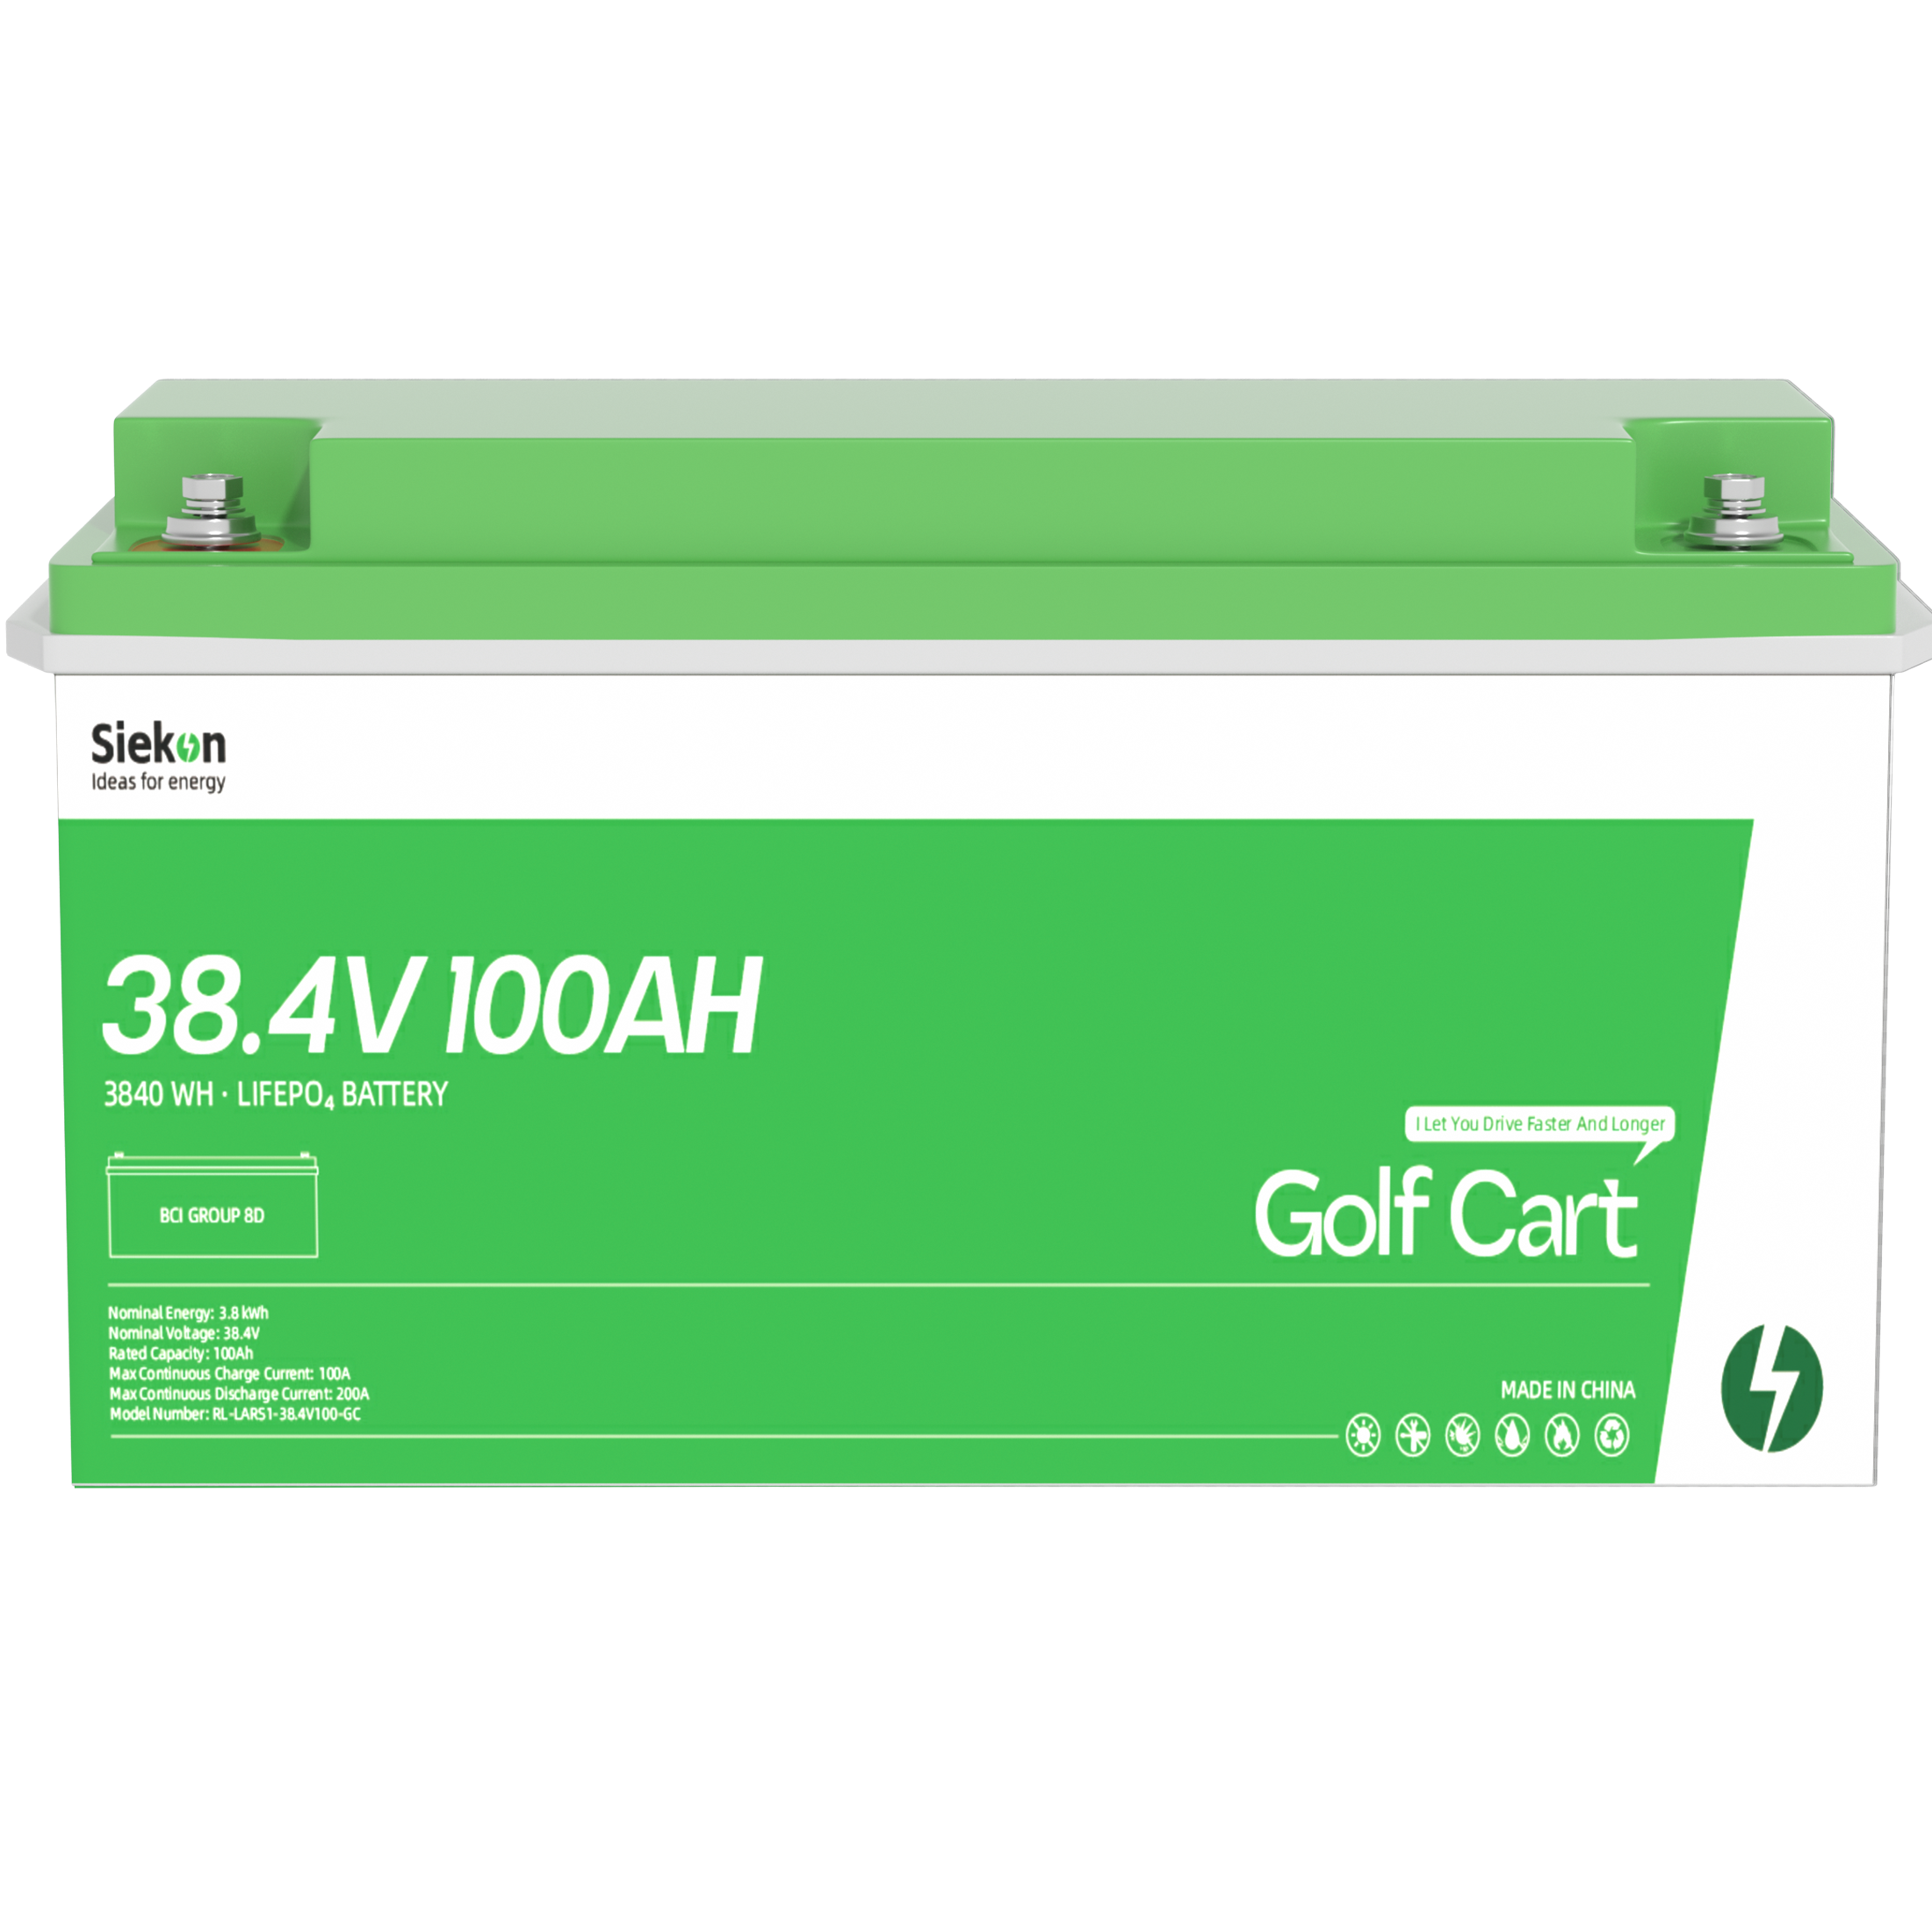 Siekon 36V 100Ah LiFePO4 battery | Golf Cart